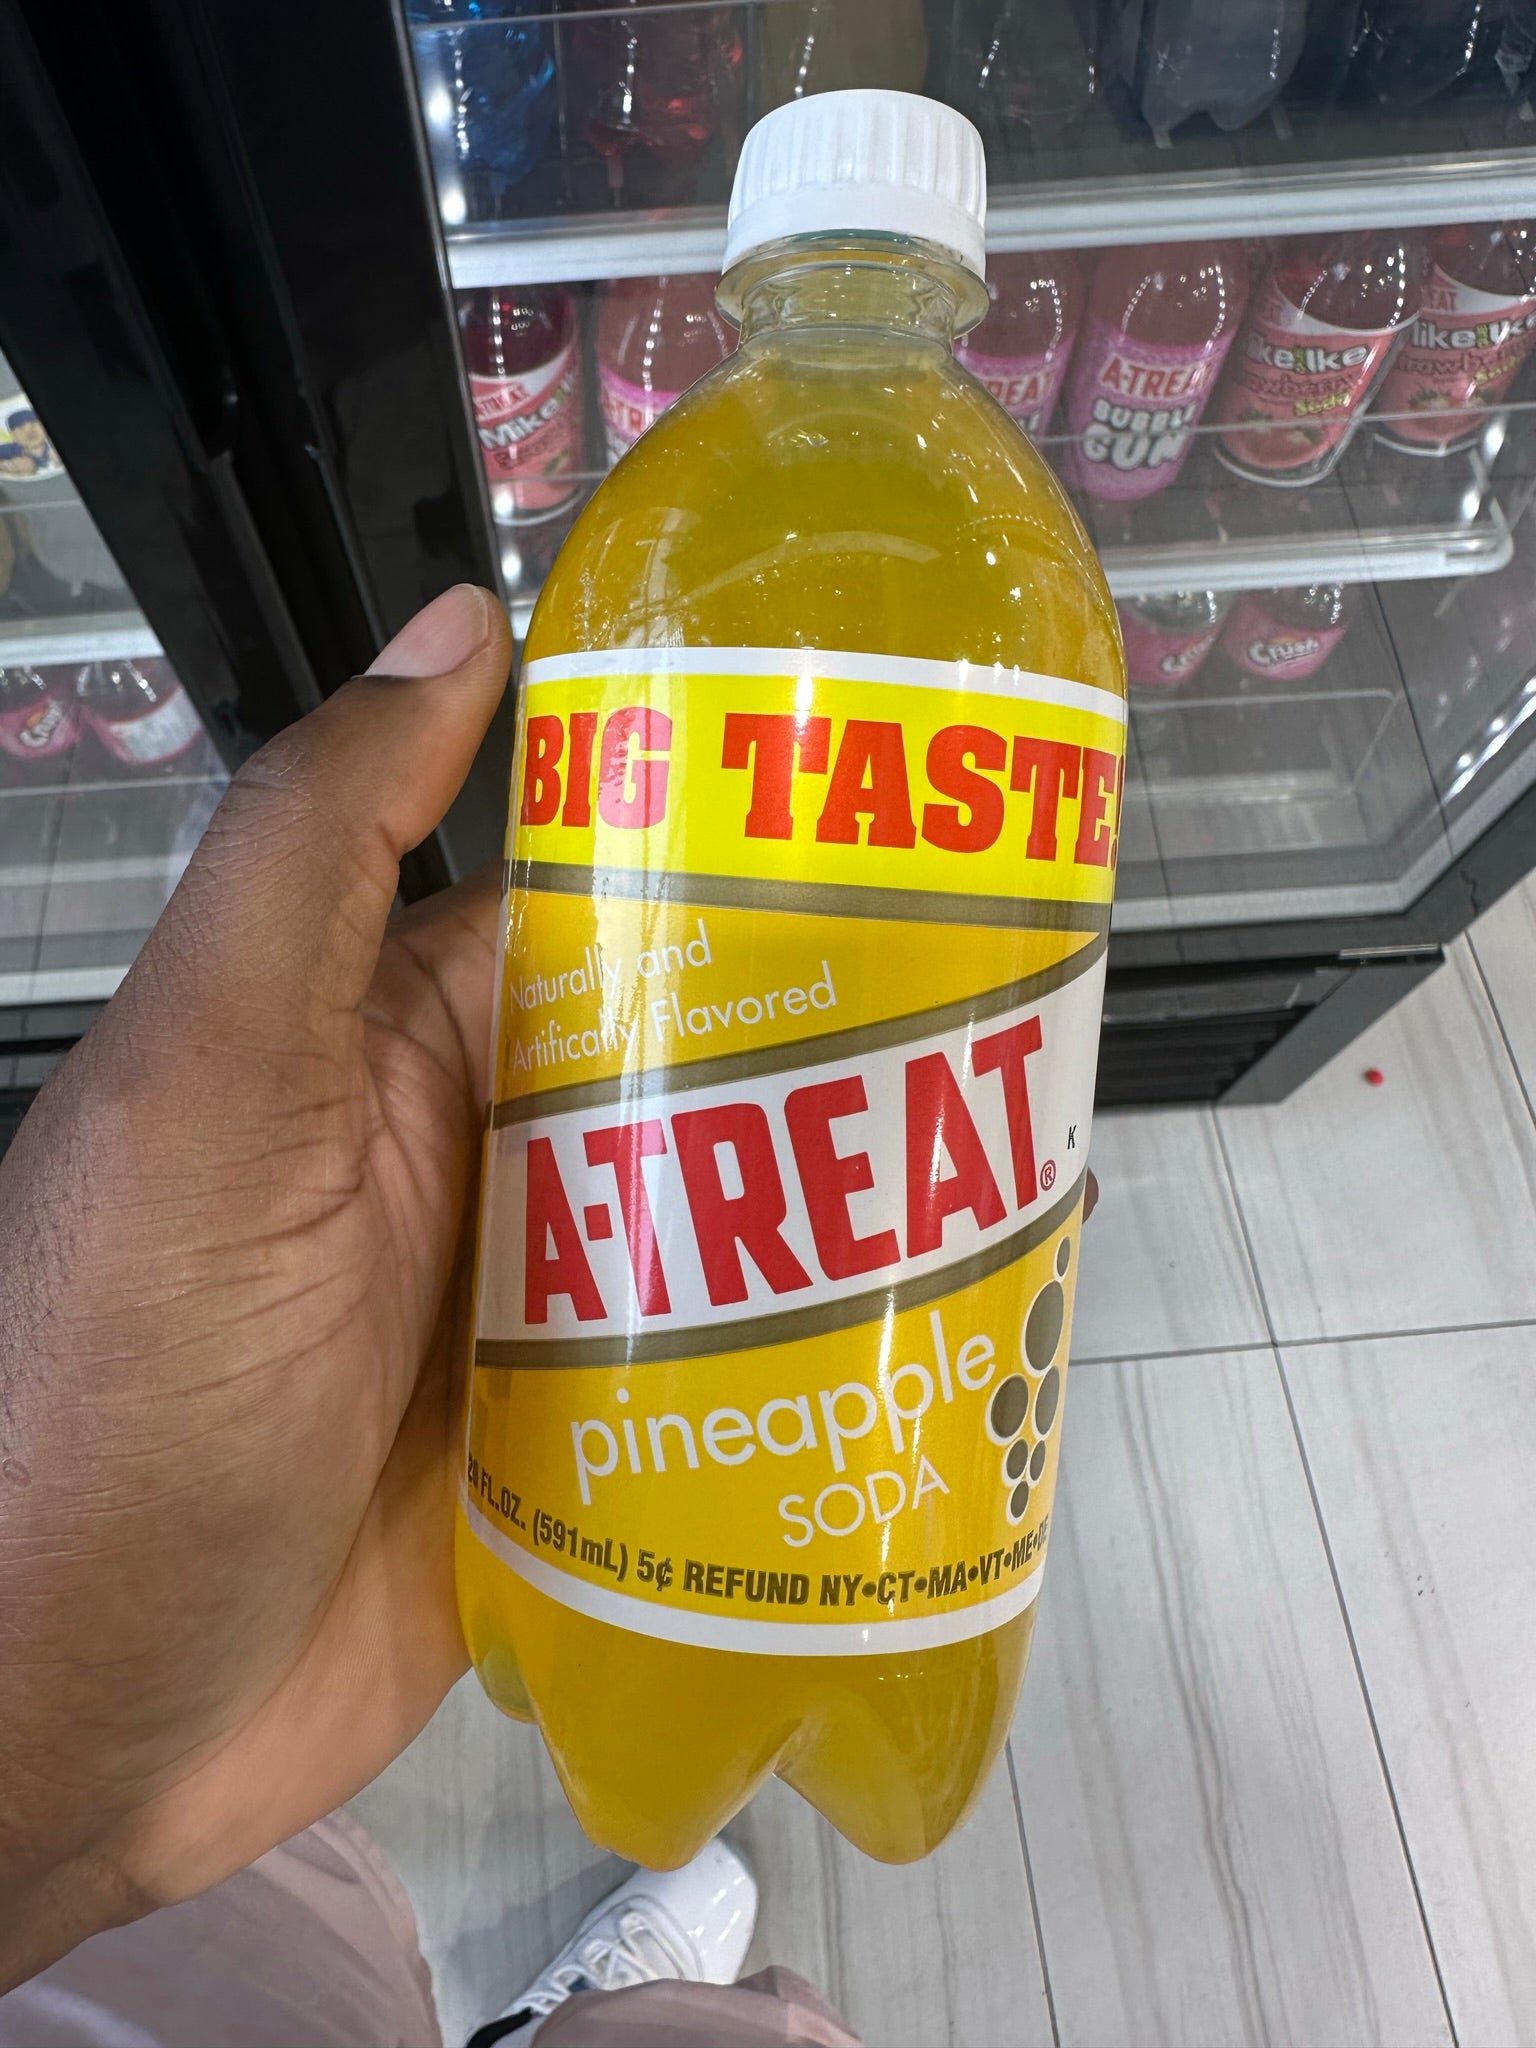 A-Treat Pineapple Soda